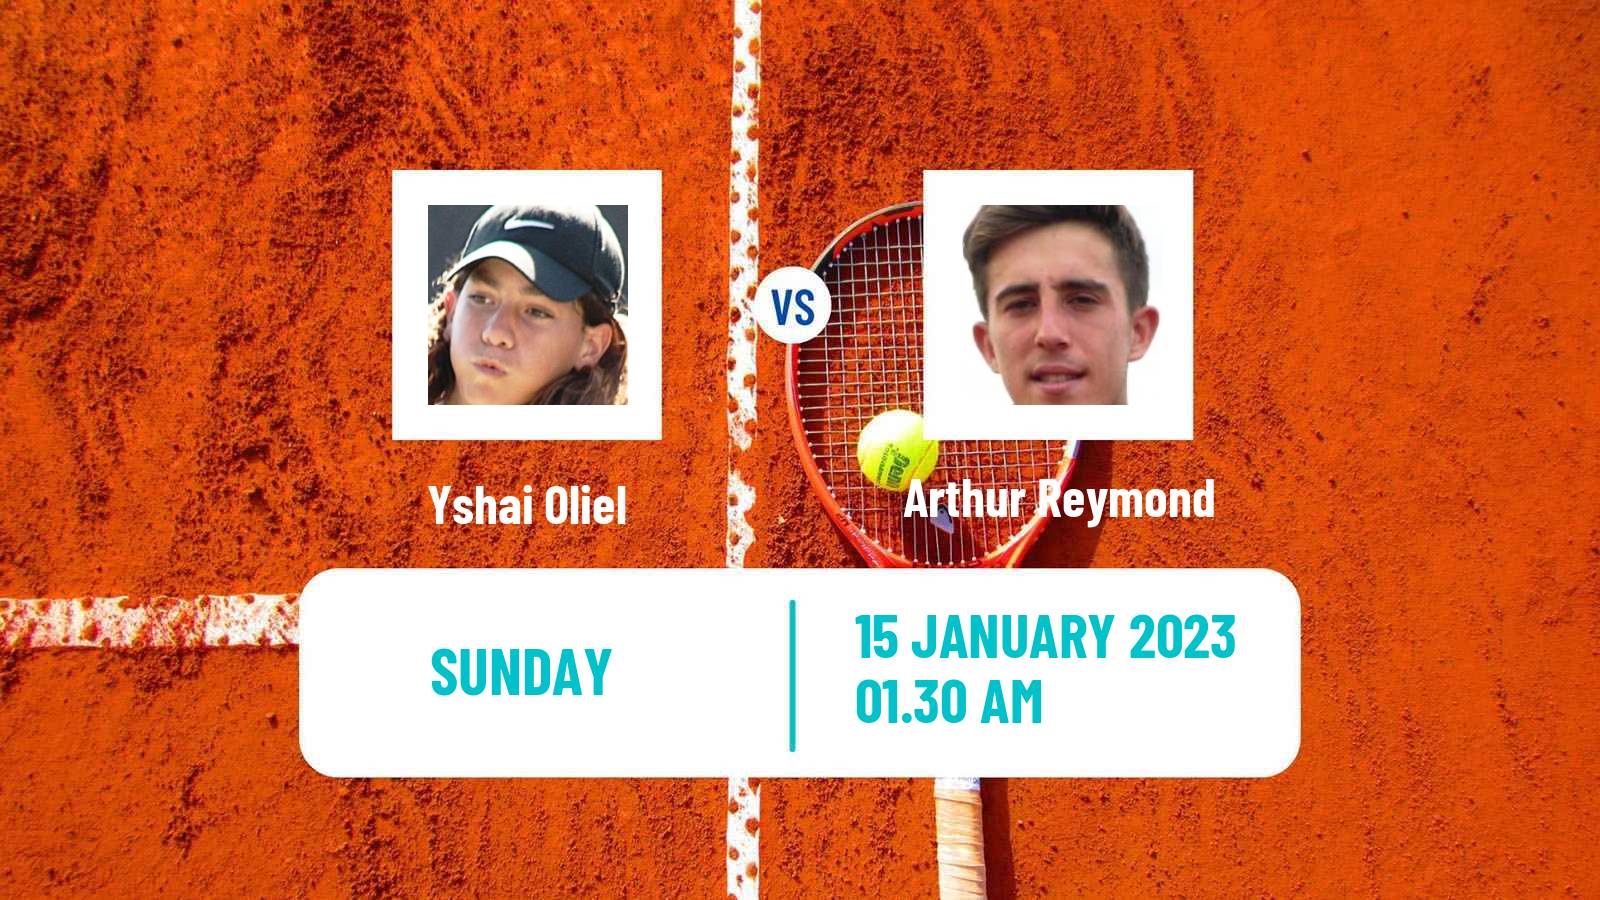 Tennis ITF Tournaments Yshai Oliel - Arthur Reymond